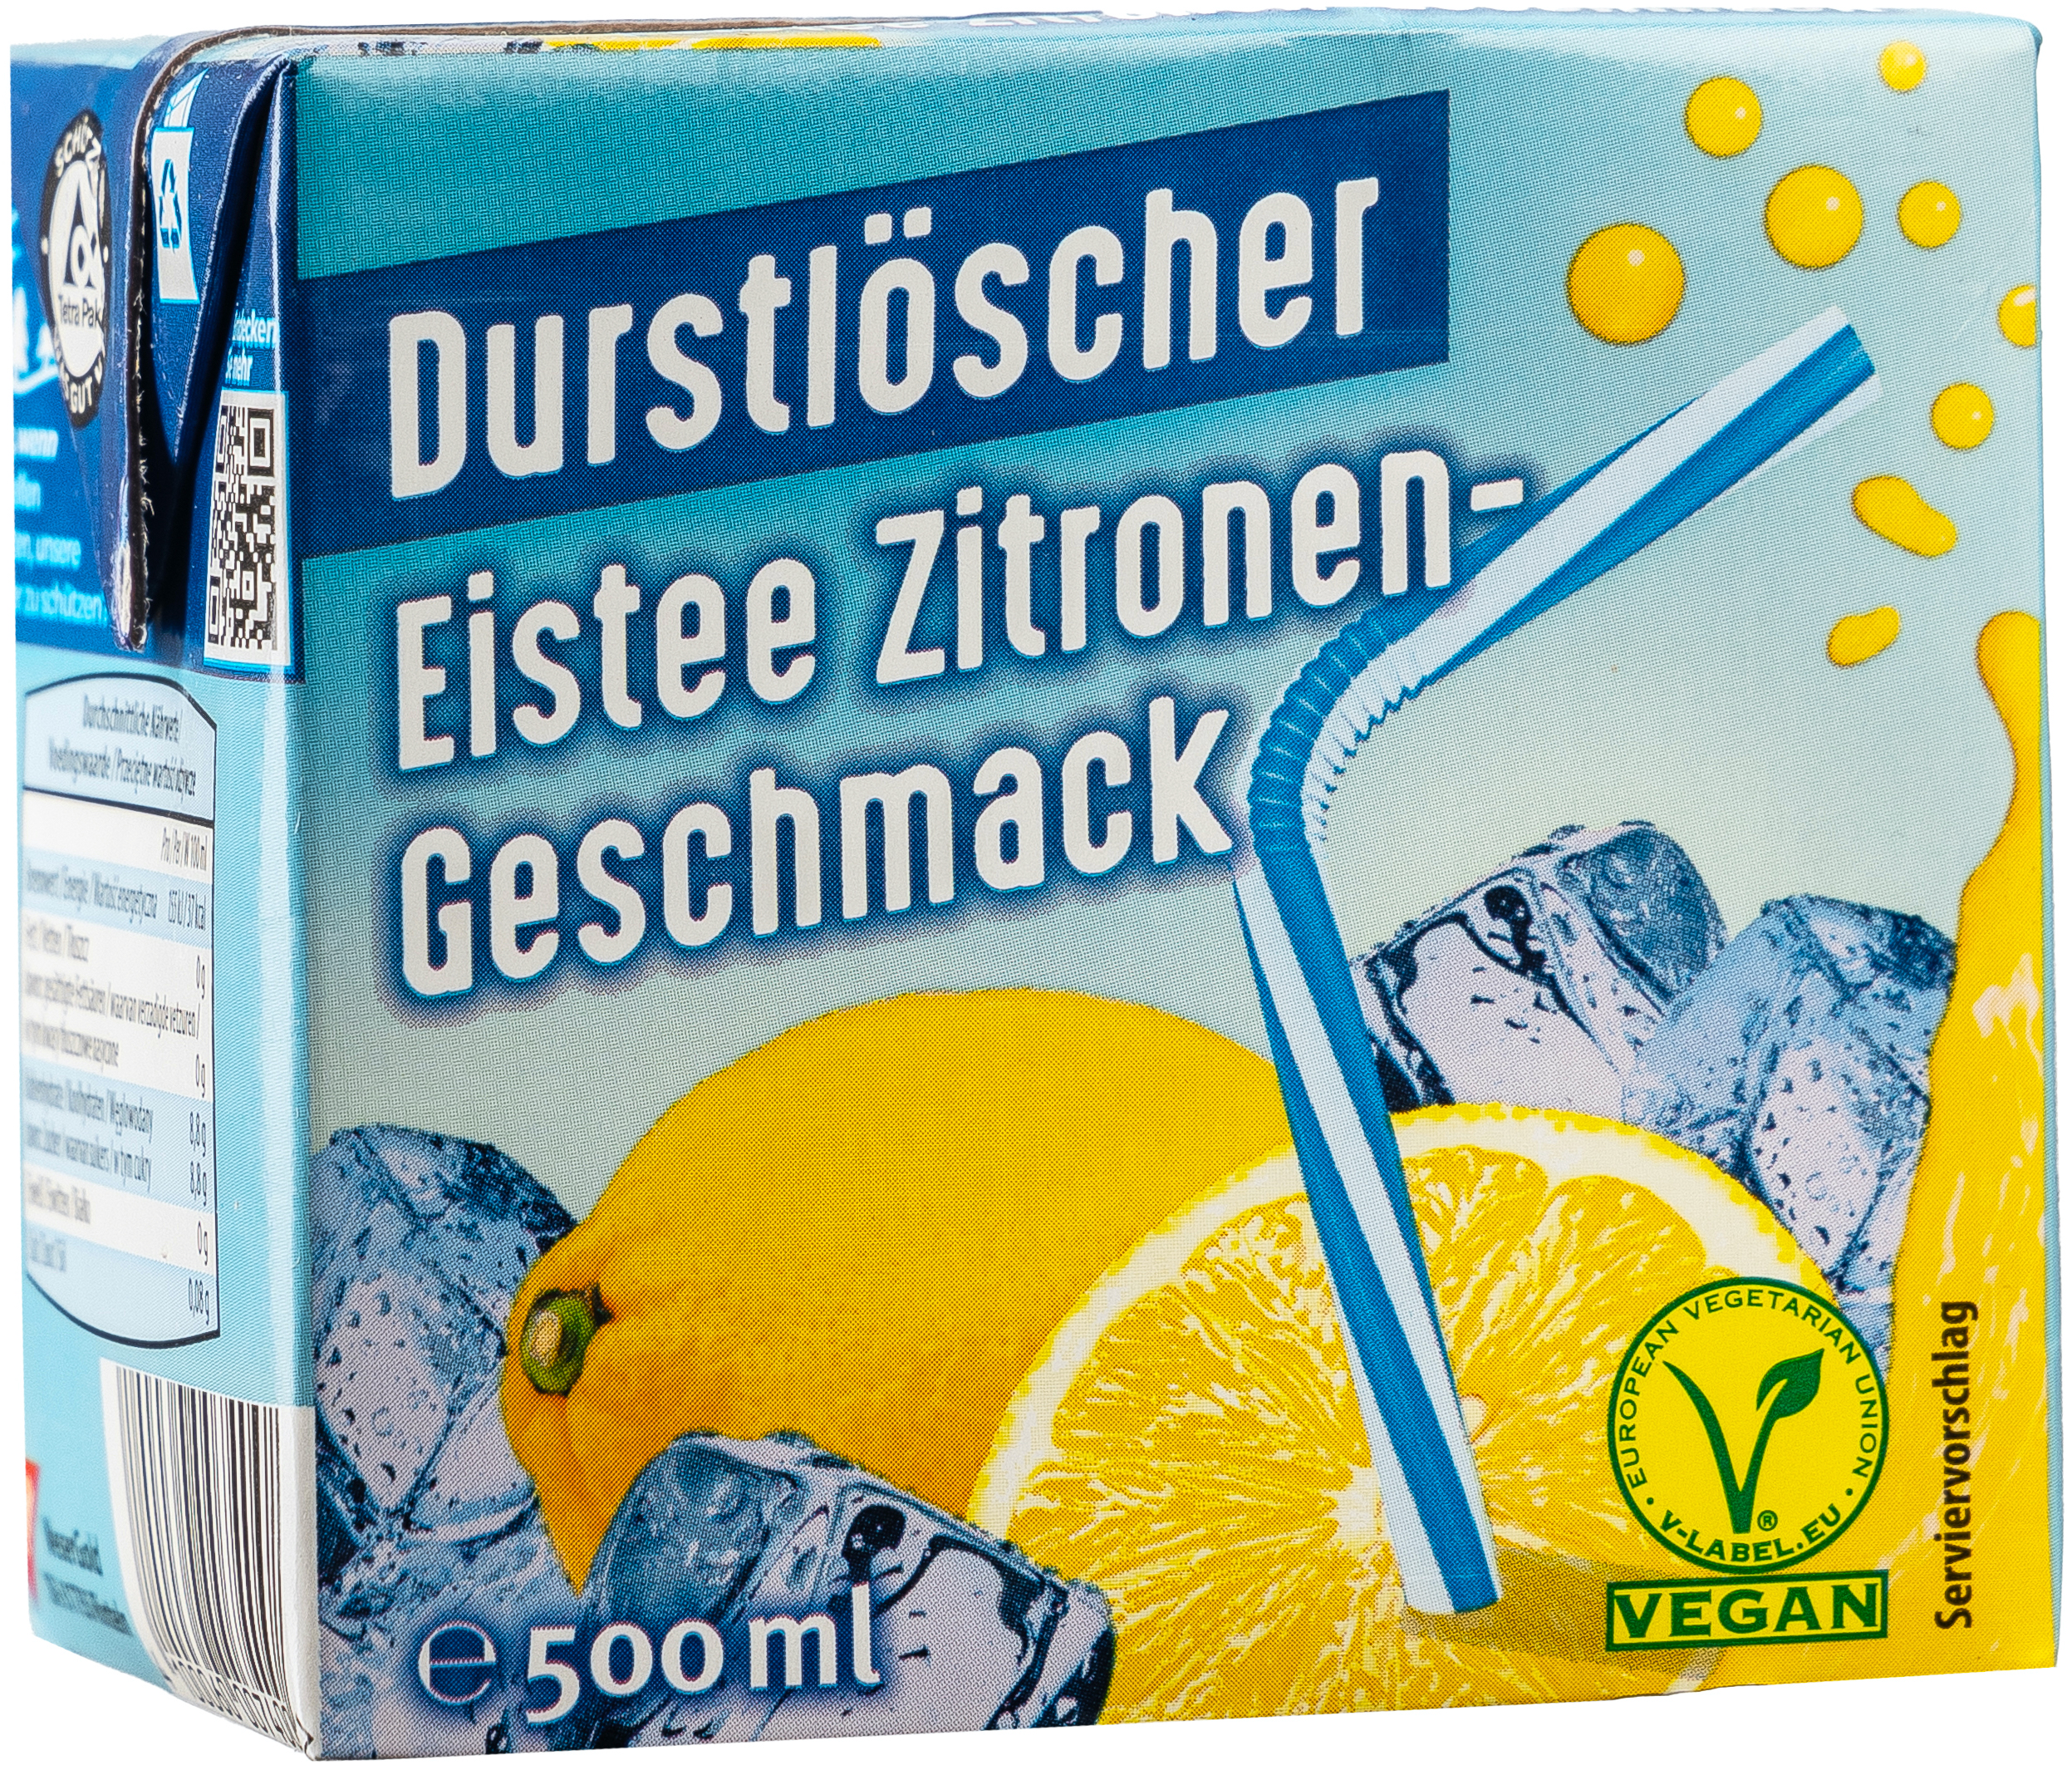 Durstlöscher Eistee Zitronen-Geschmack 0,5L